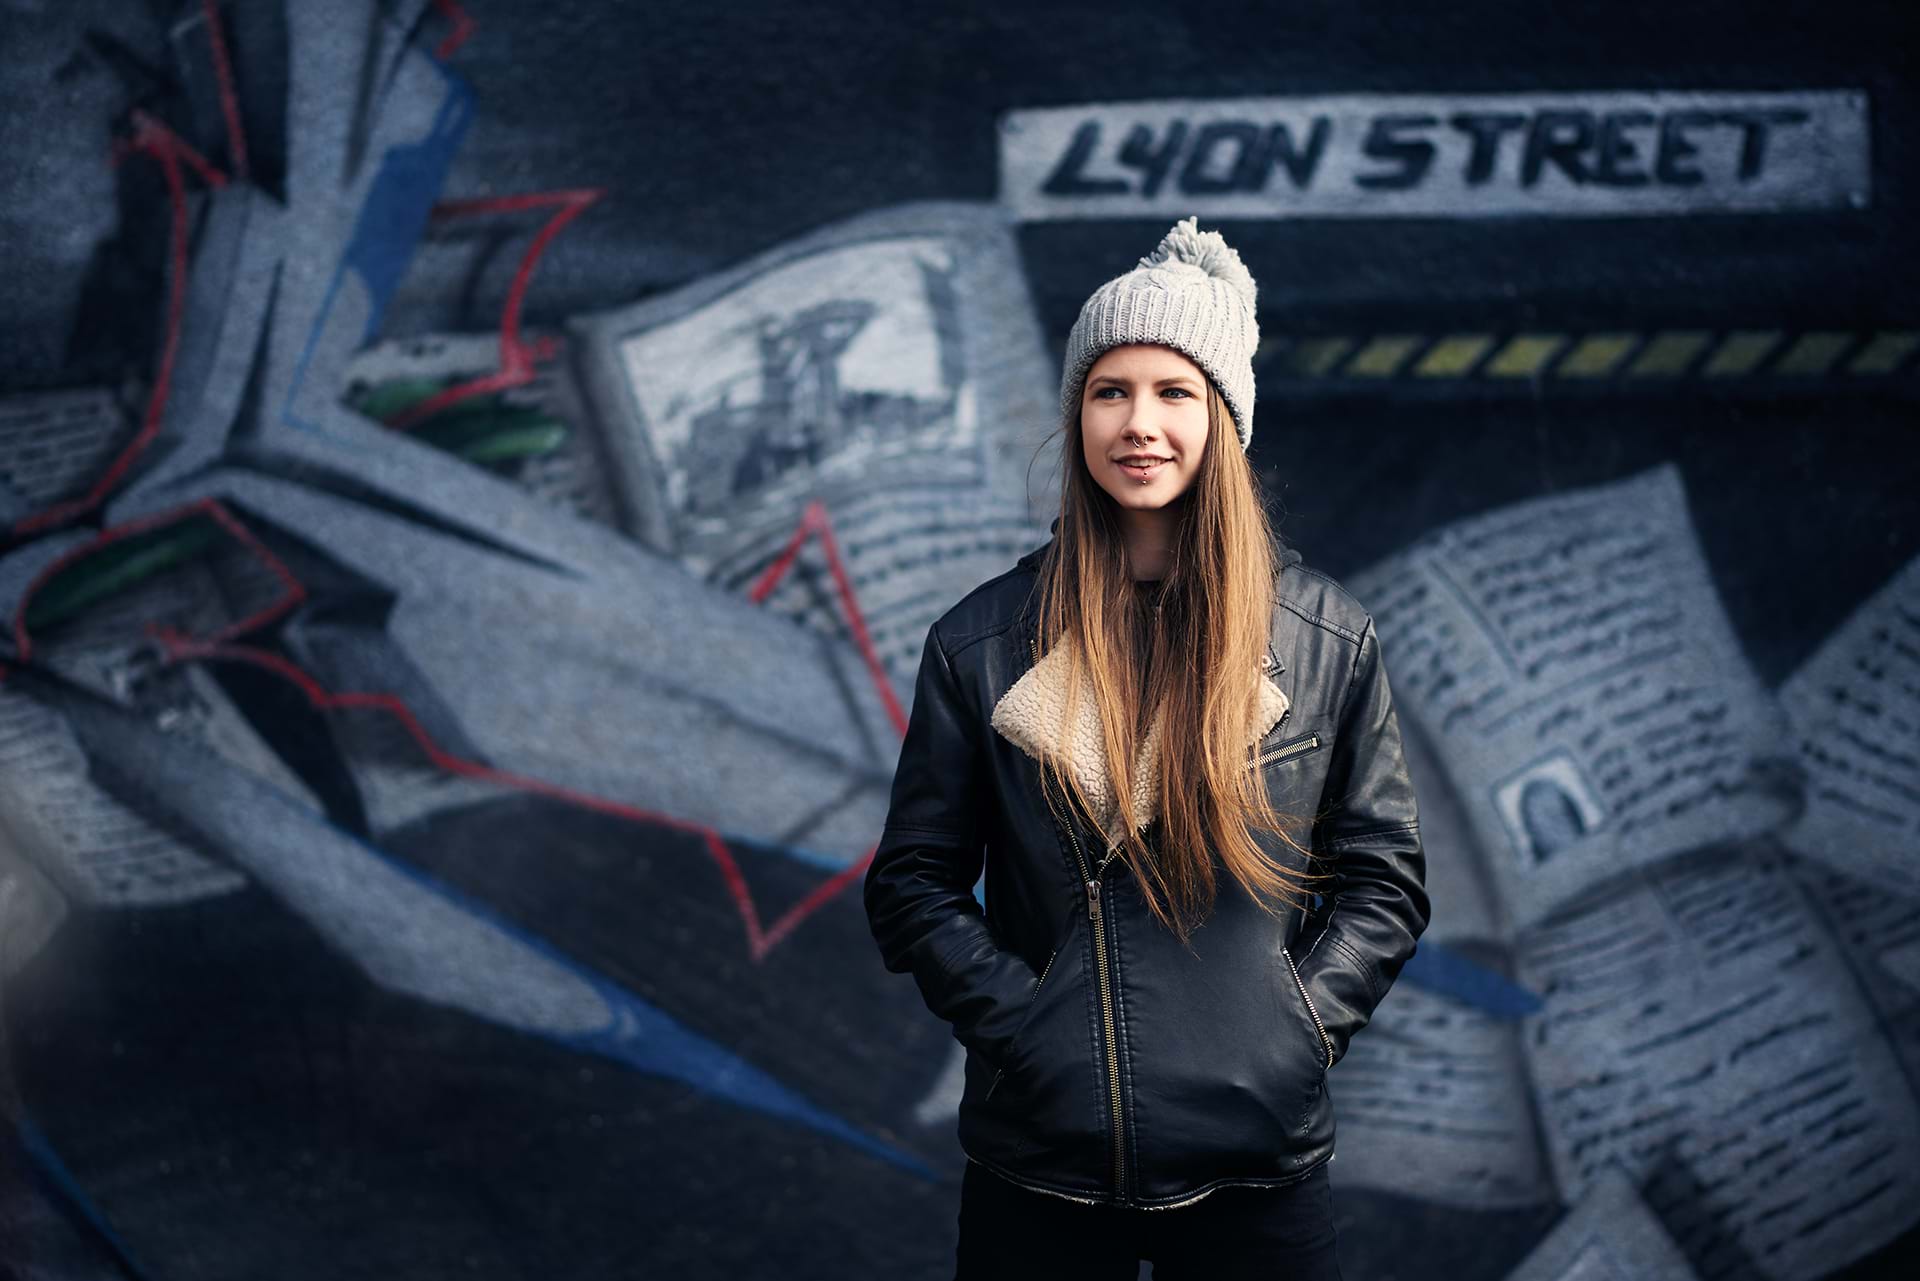 A female student standing outside a graffiti mural of Lyon Street